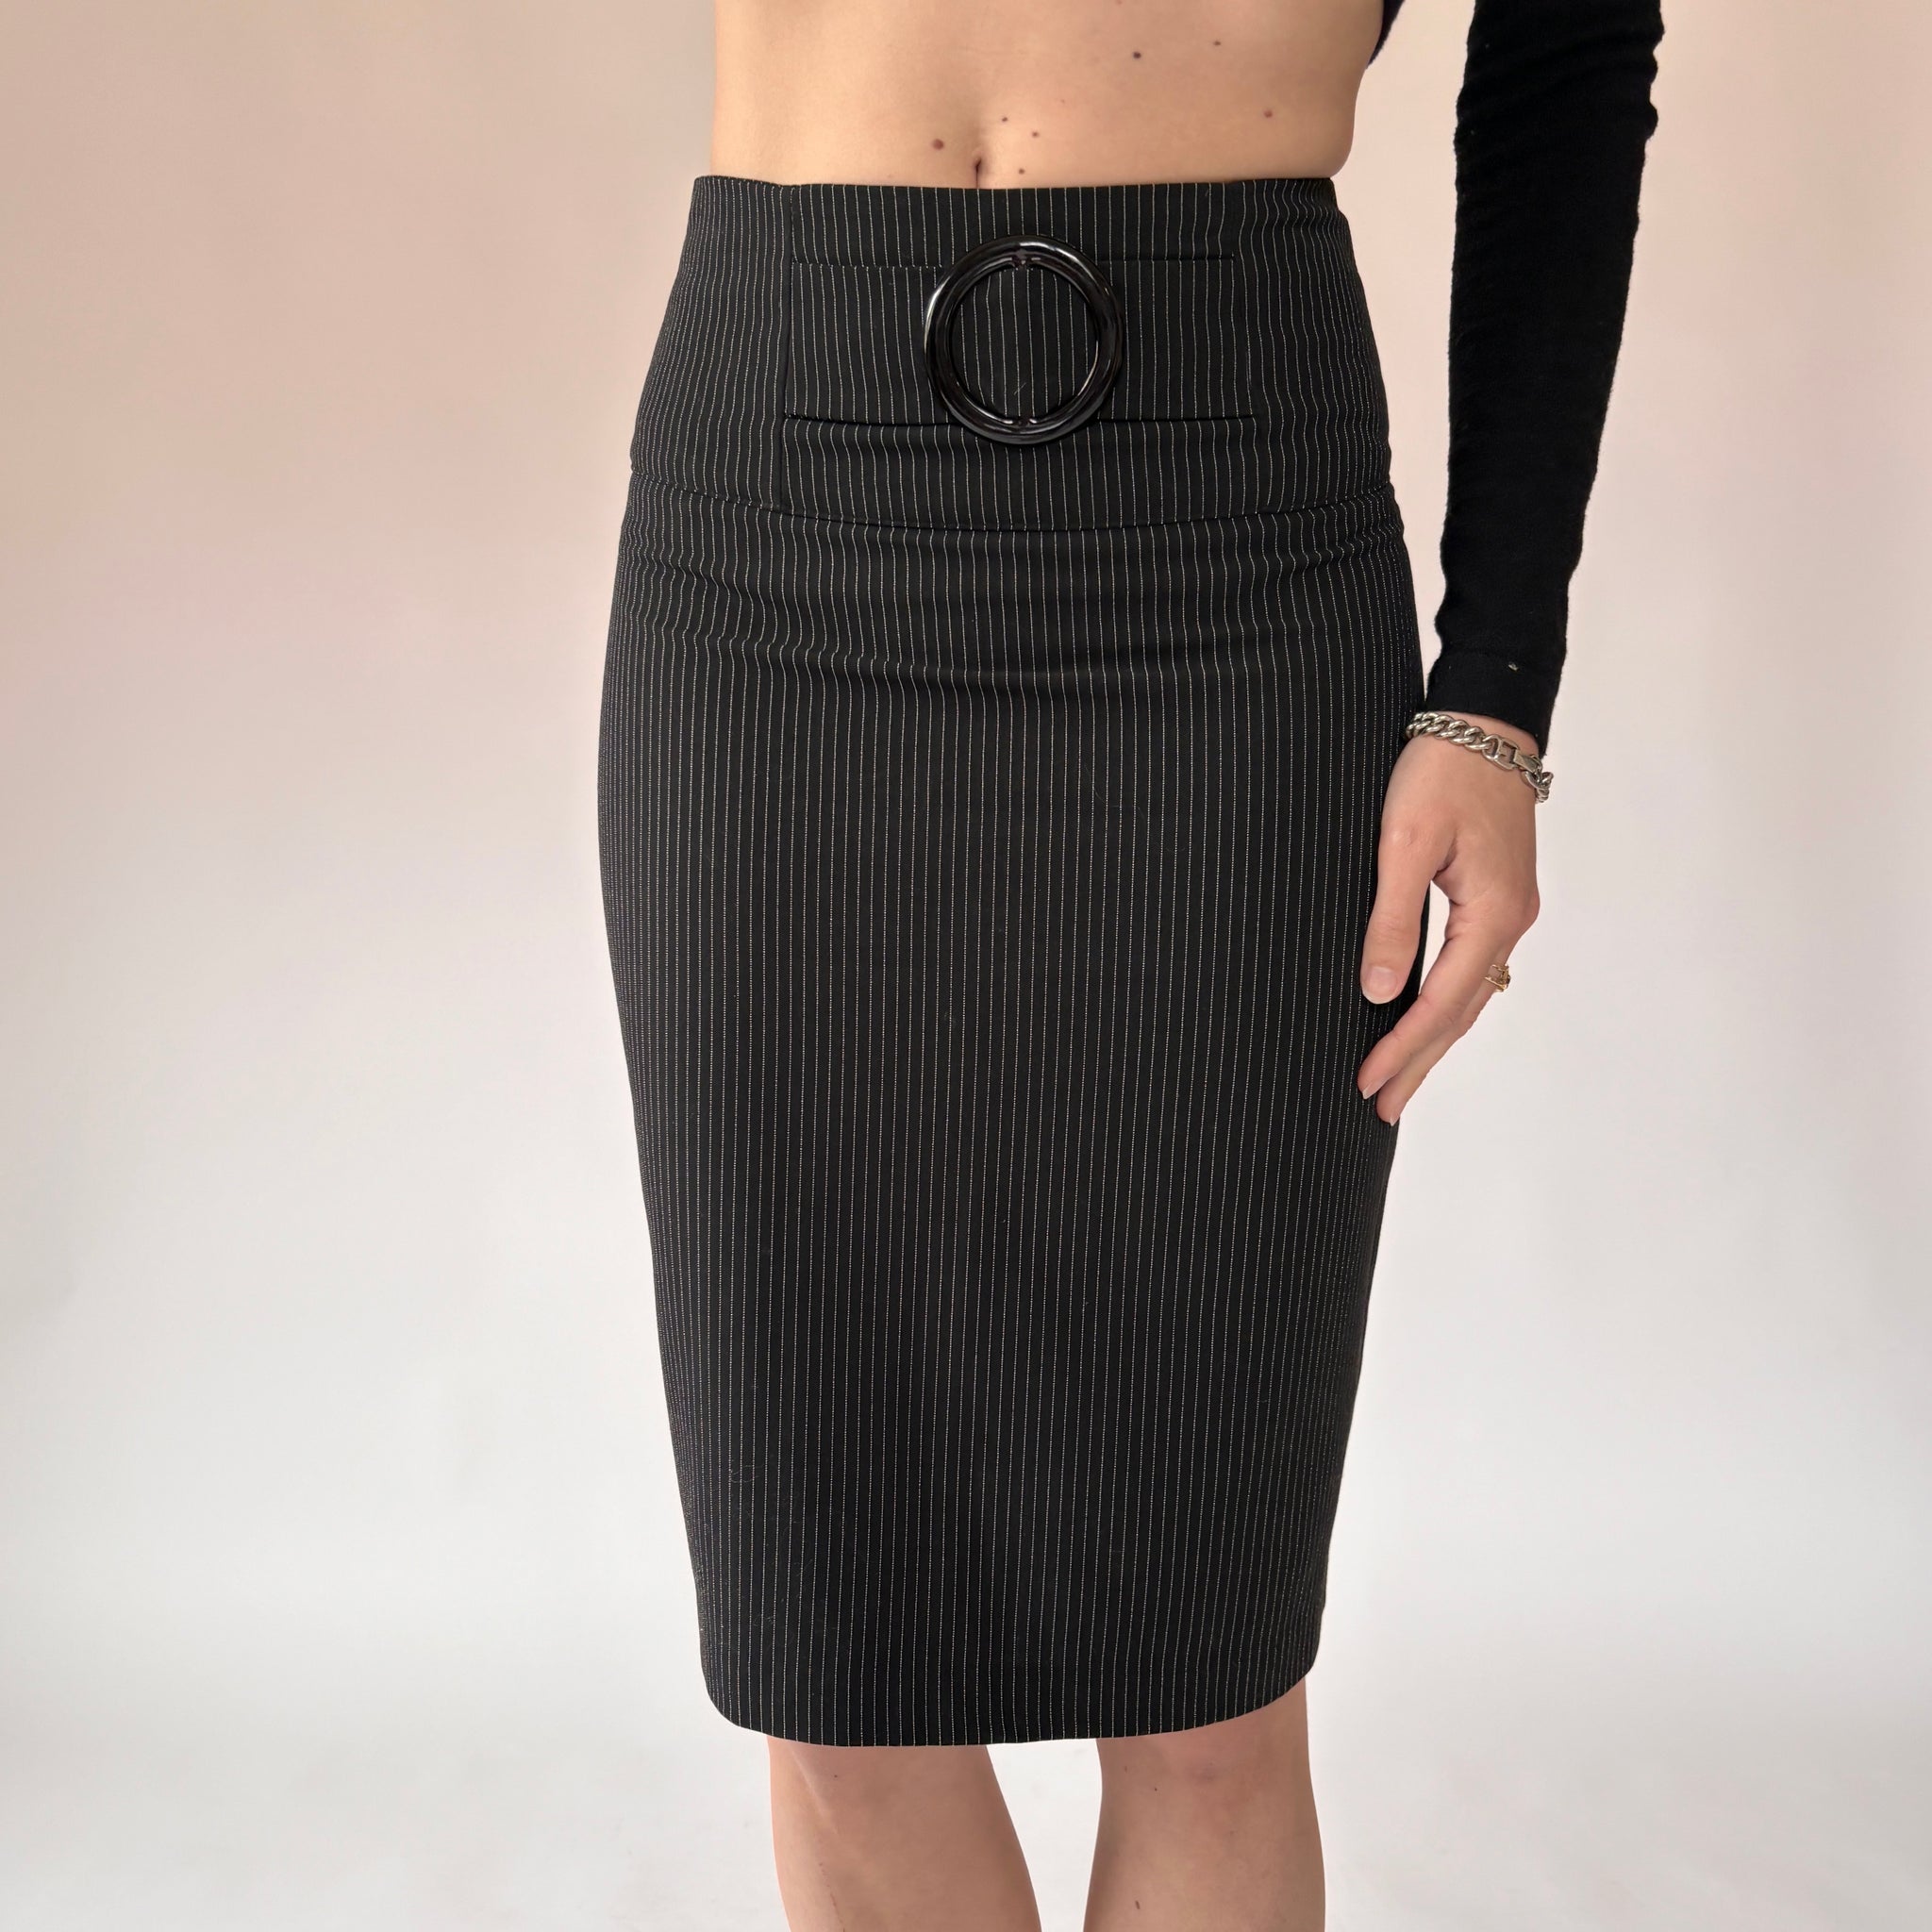 2000s Pinstripe Pencil Skirt (XS)